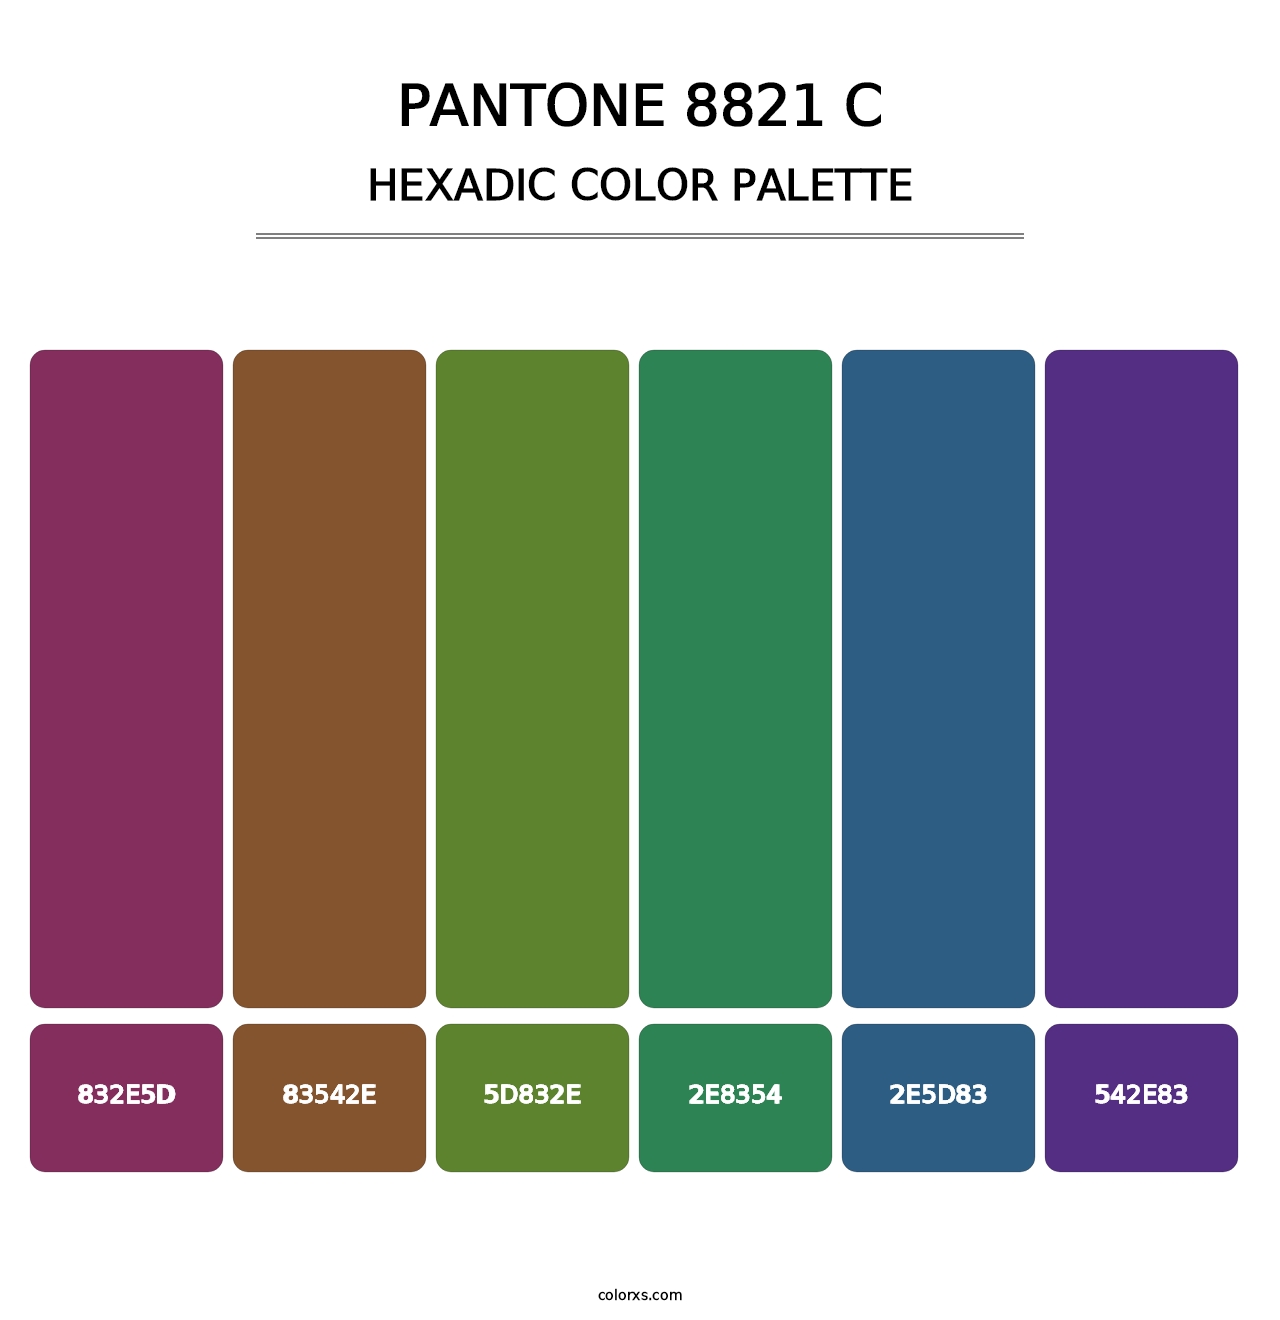 PANTONE 8821 C - Hexadic Color Palette